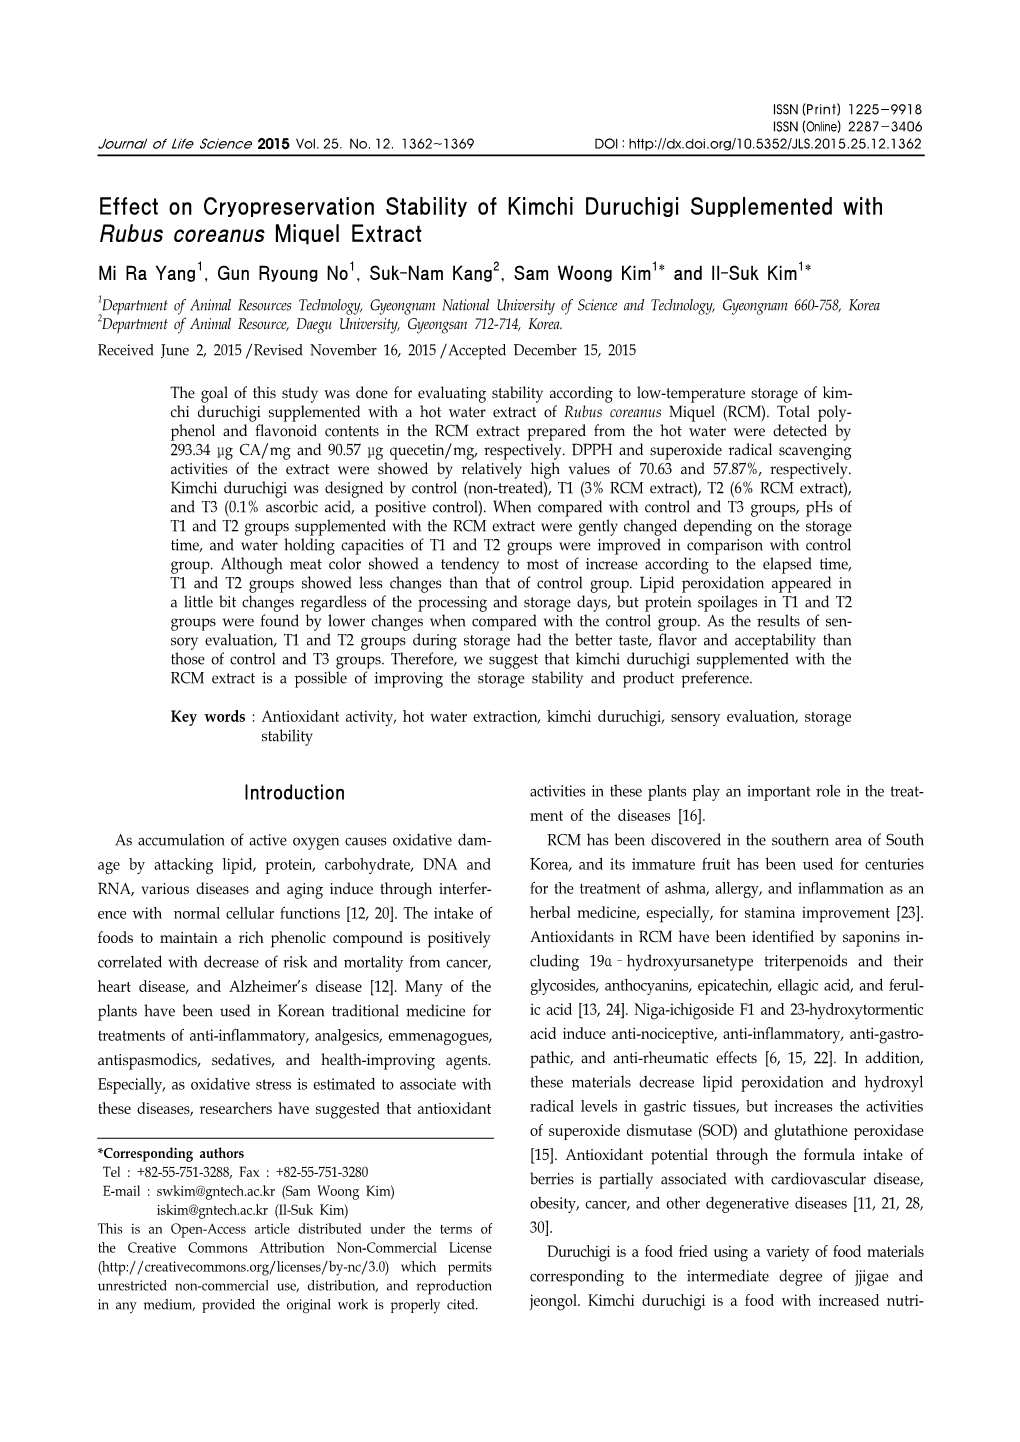 Effect on Cryopreservation Stability of Kimchi Duruchigi Supplemented with Rubus Coreanus Miquel Extract